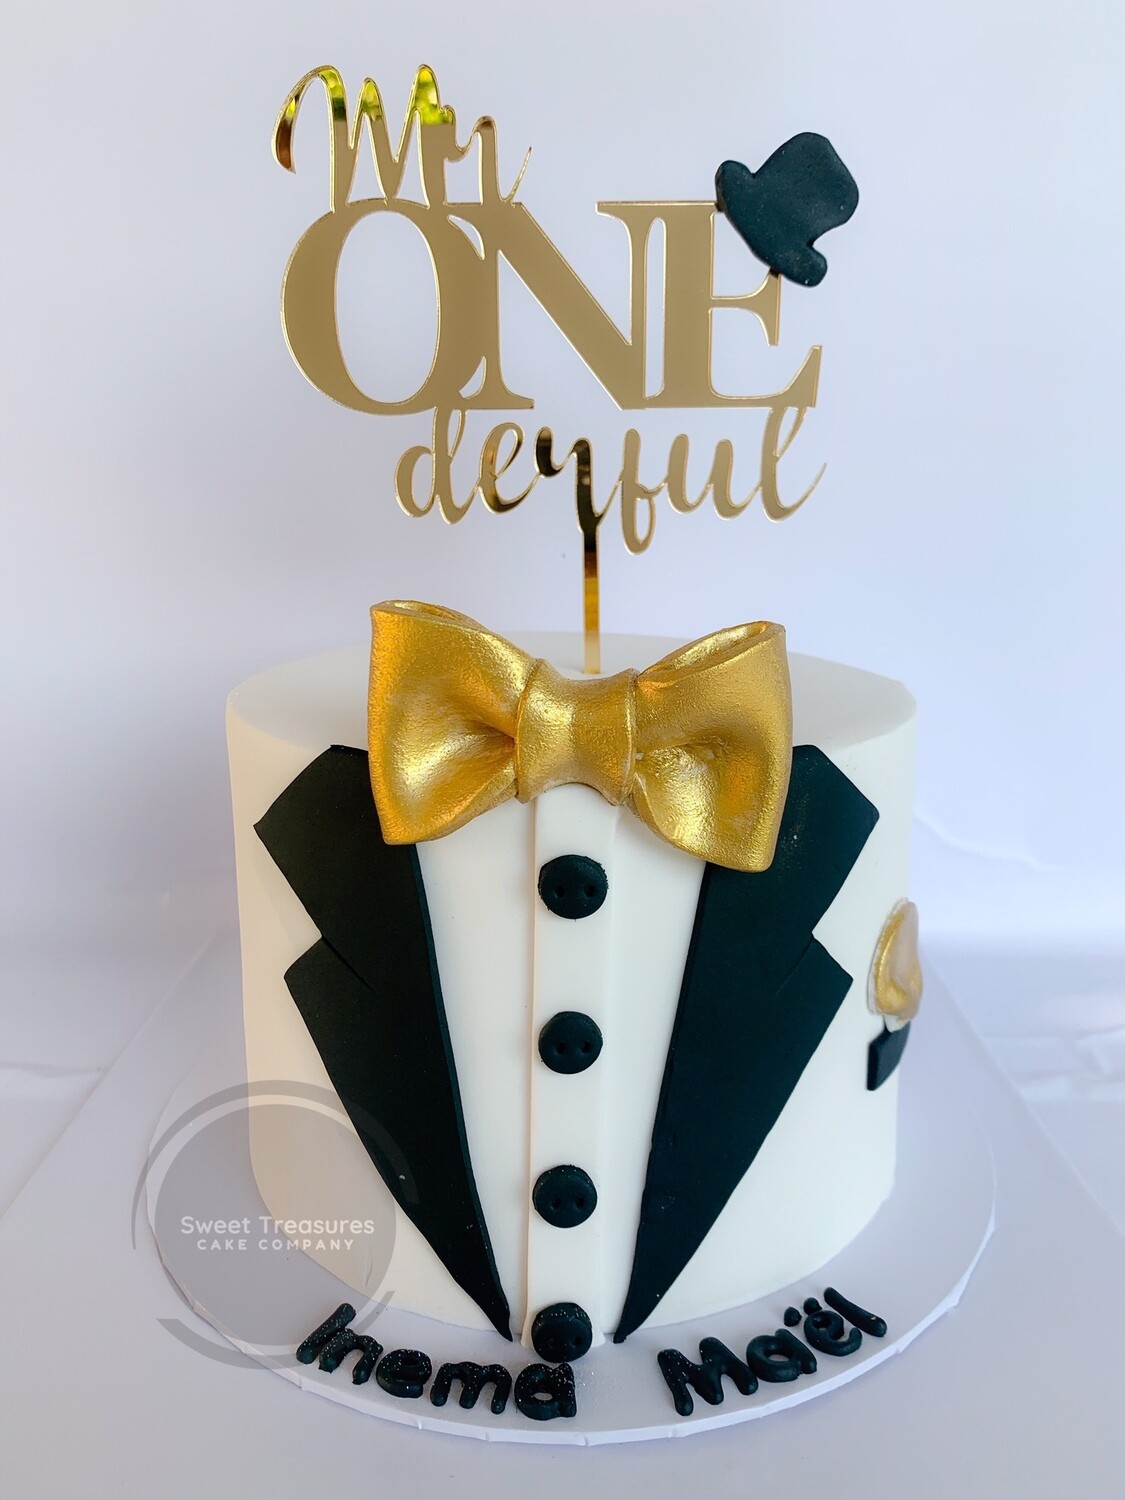 Mr ONEderful Single Suit tier cake